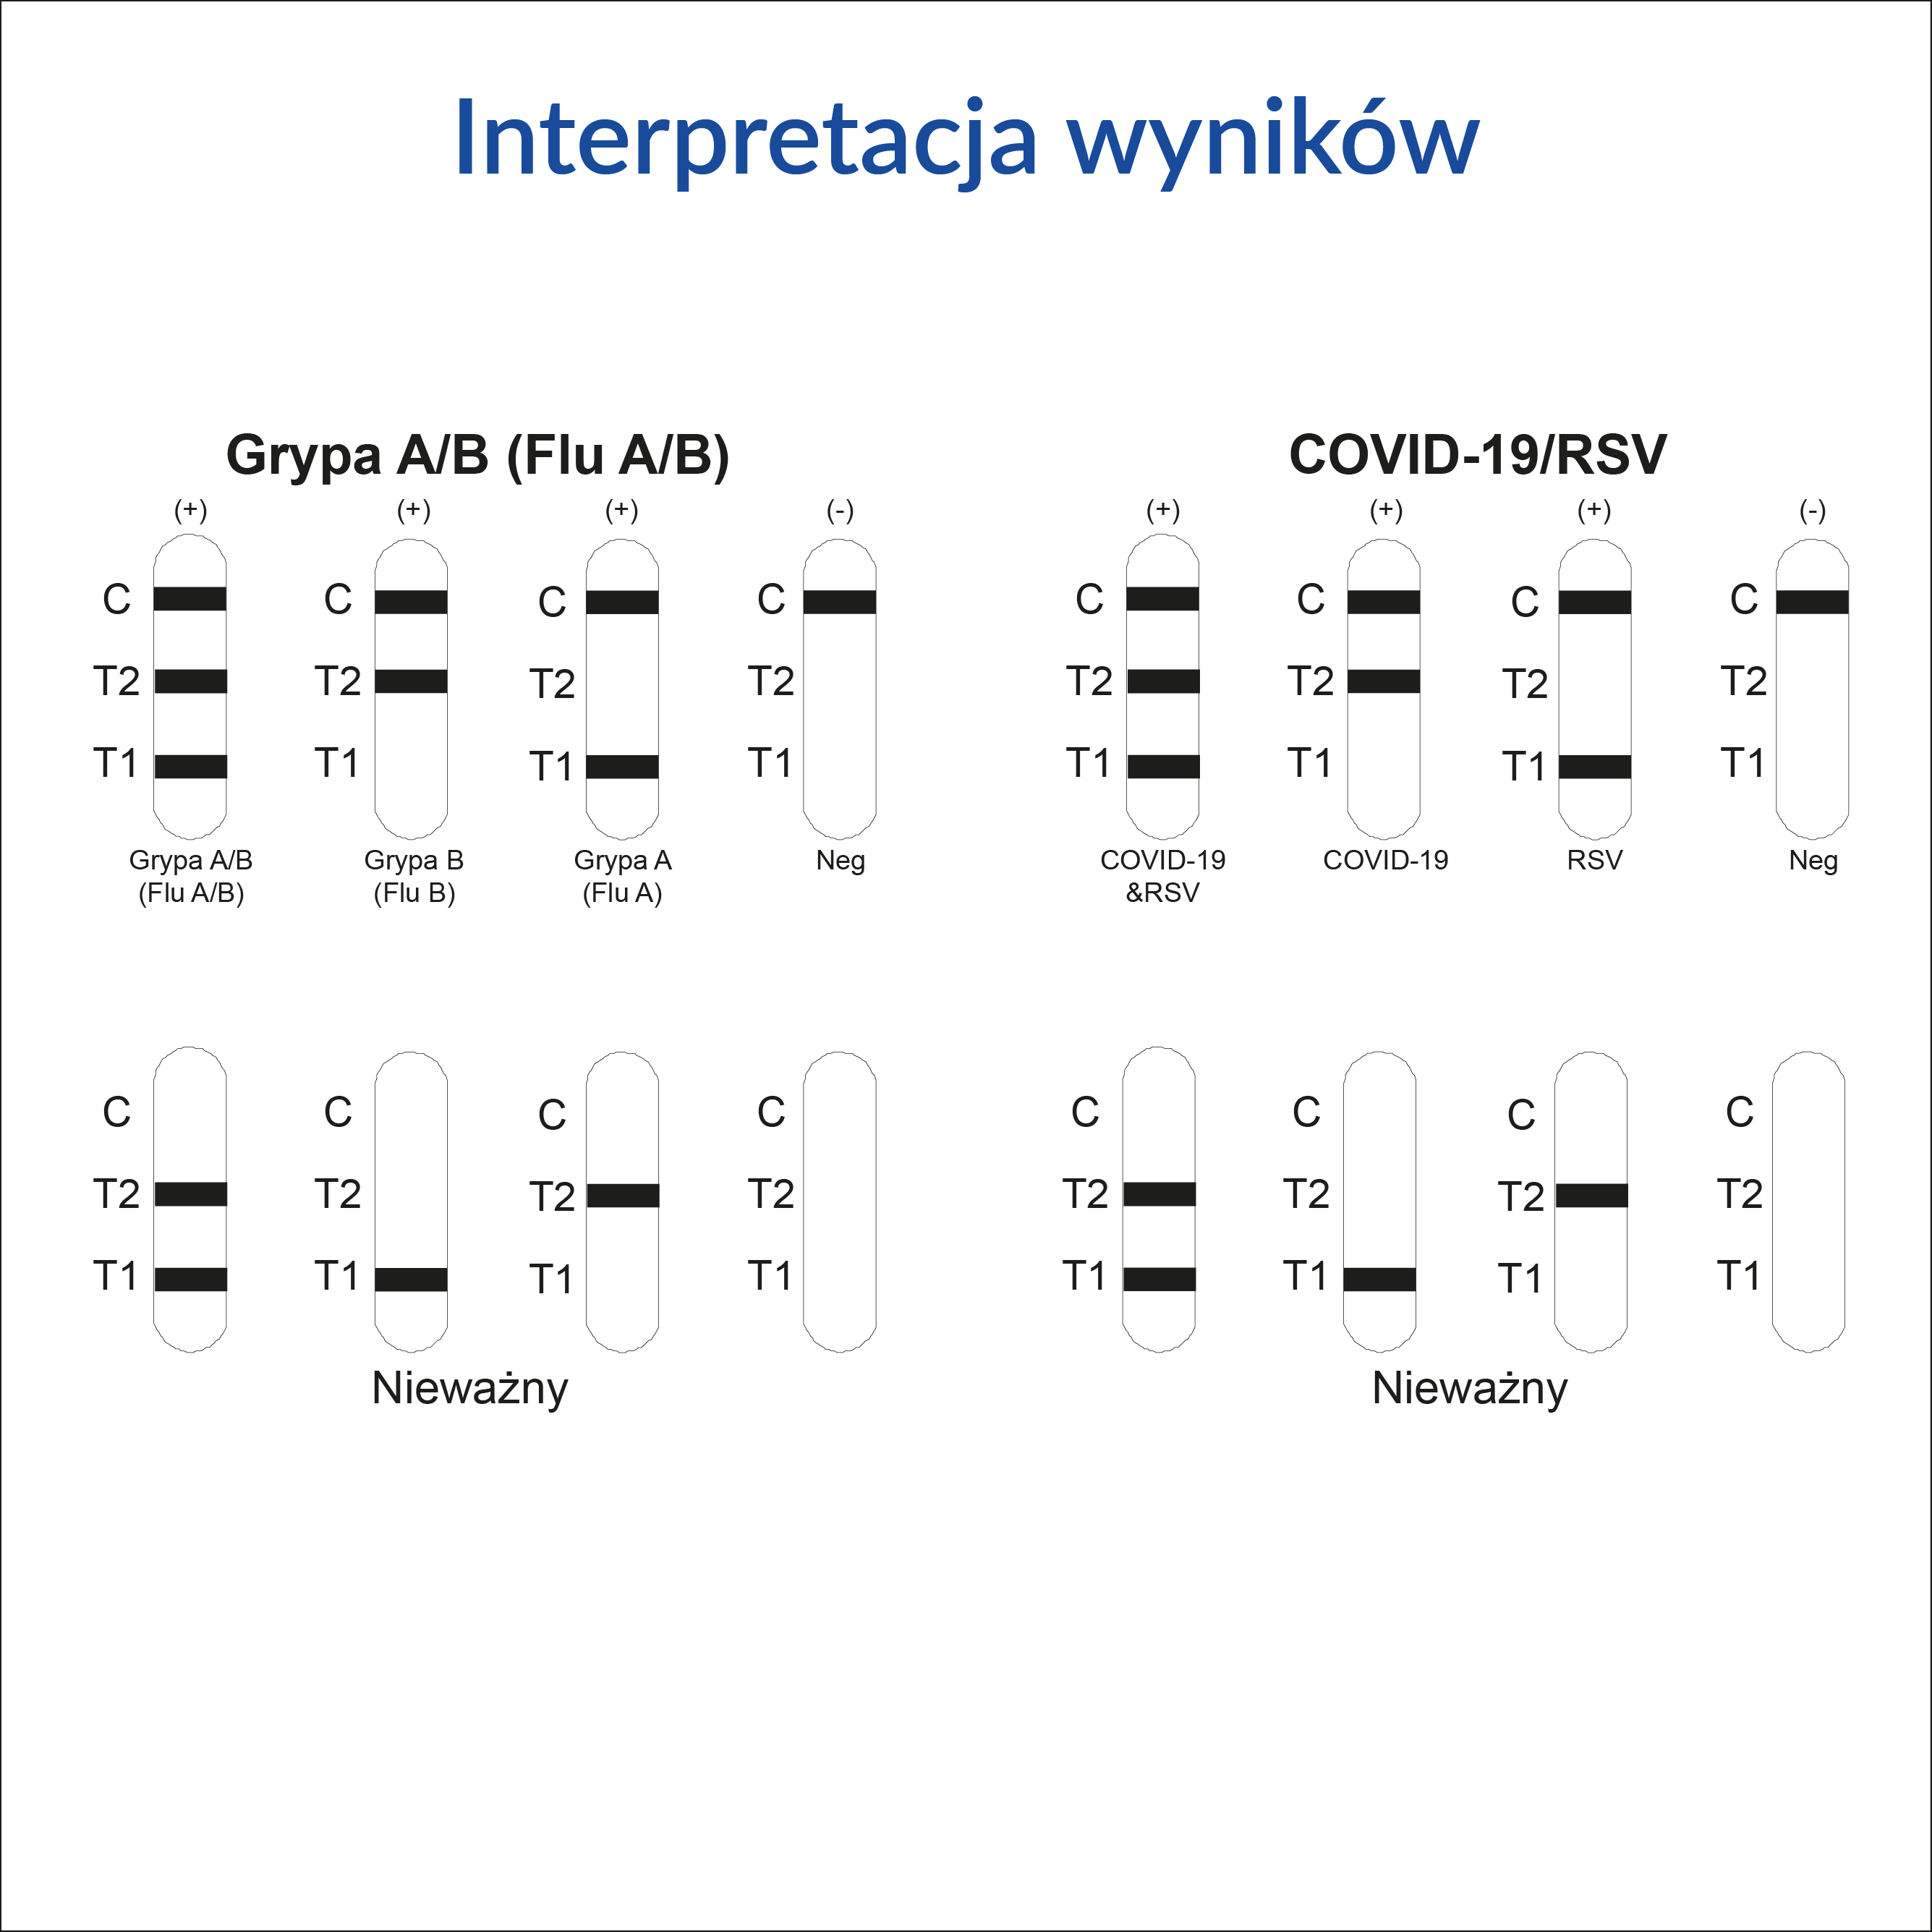 TEST GRYPA A/B + COVID-19/RSV Combo Ag 2 sztuki